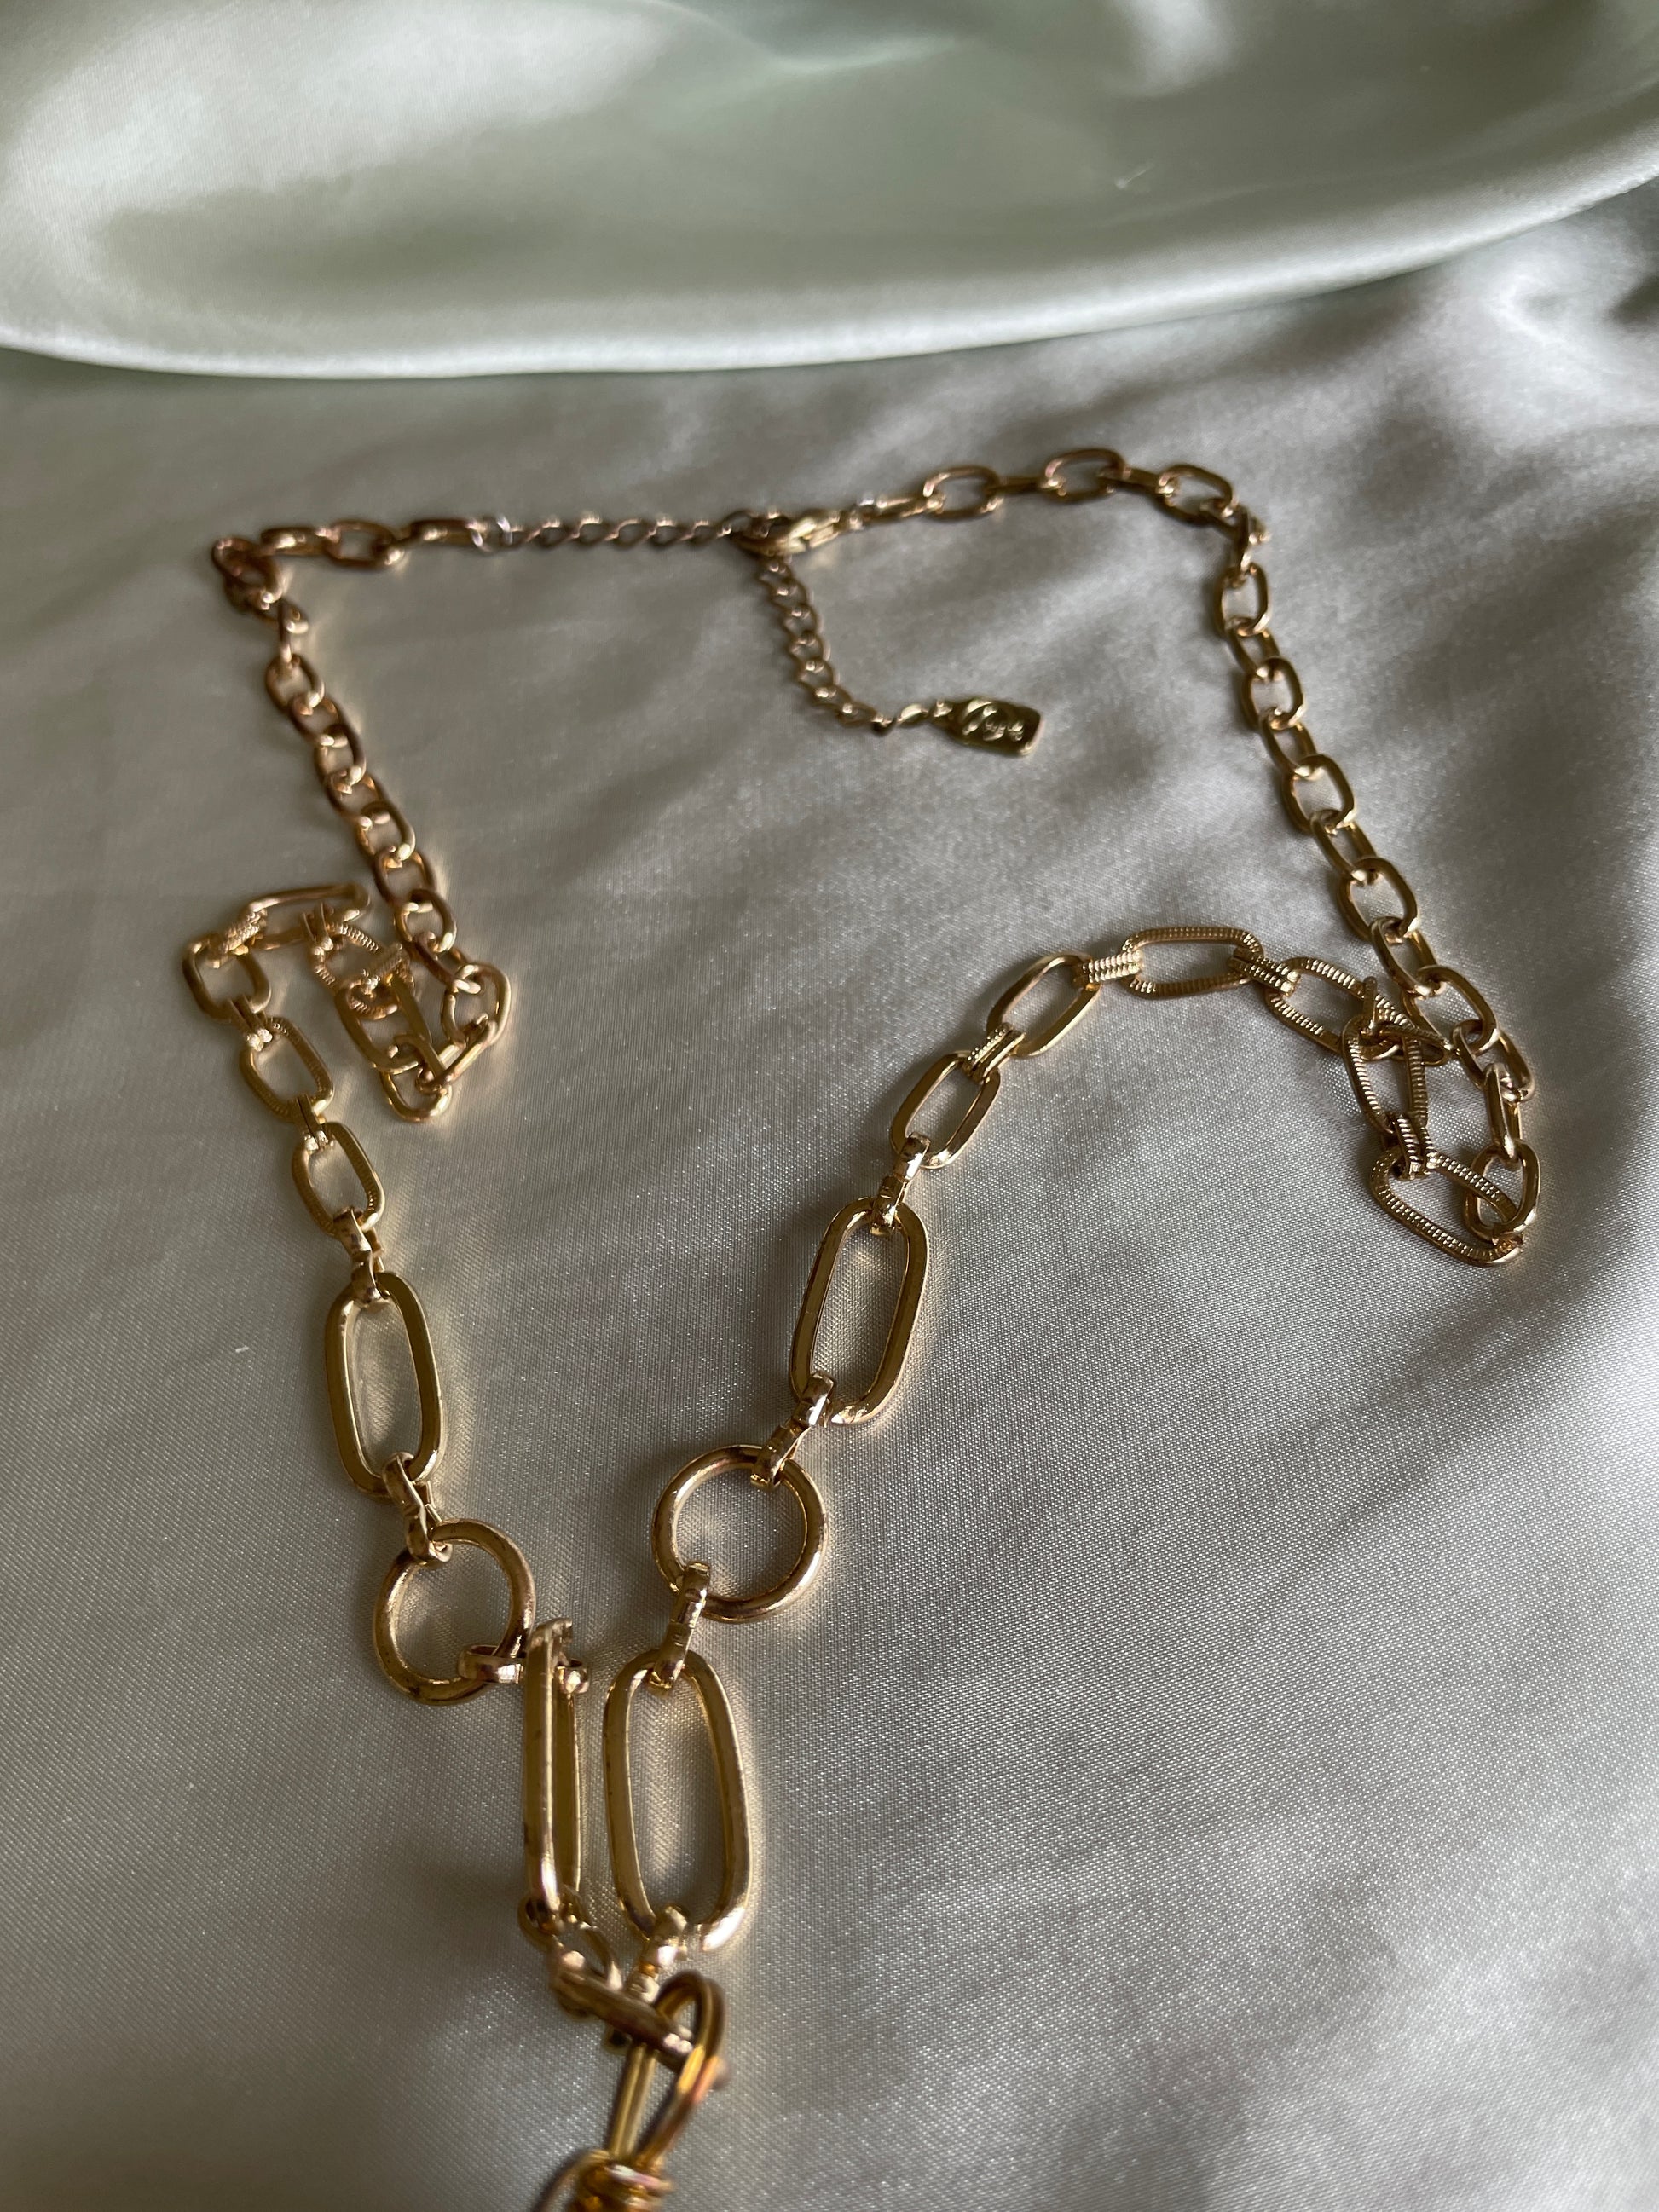  2000s Handmade Artisan Art to Wear Glass Pendant Necklace